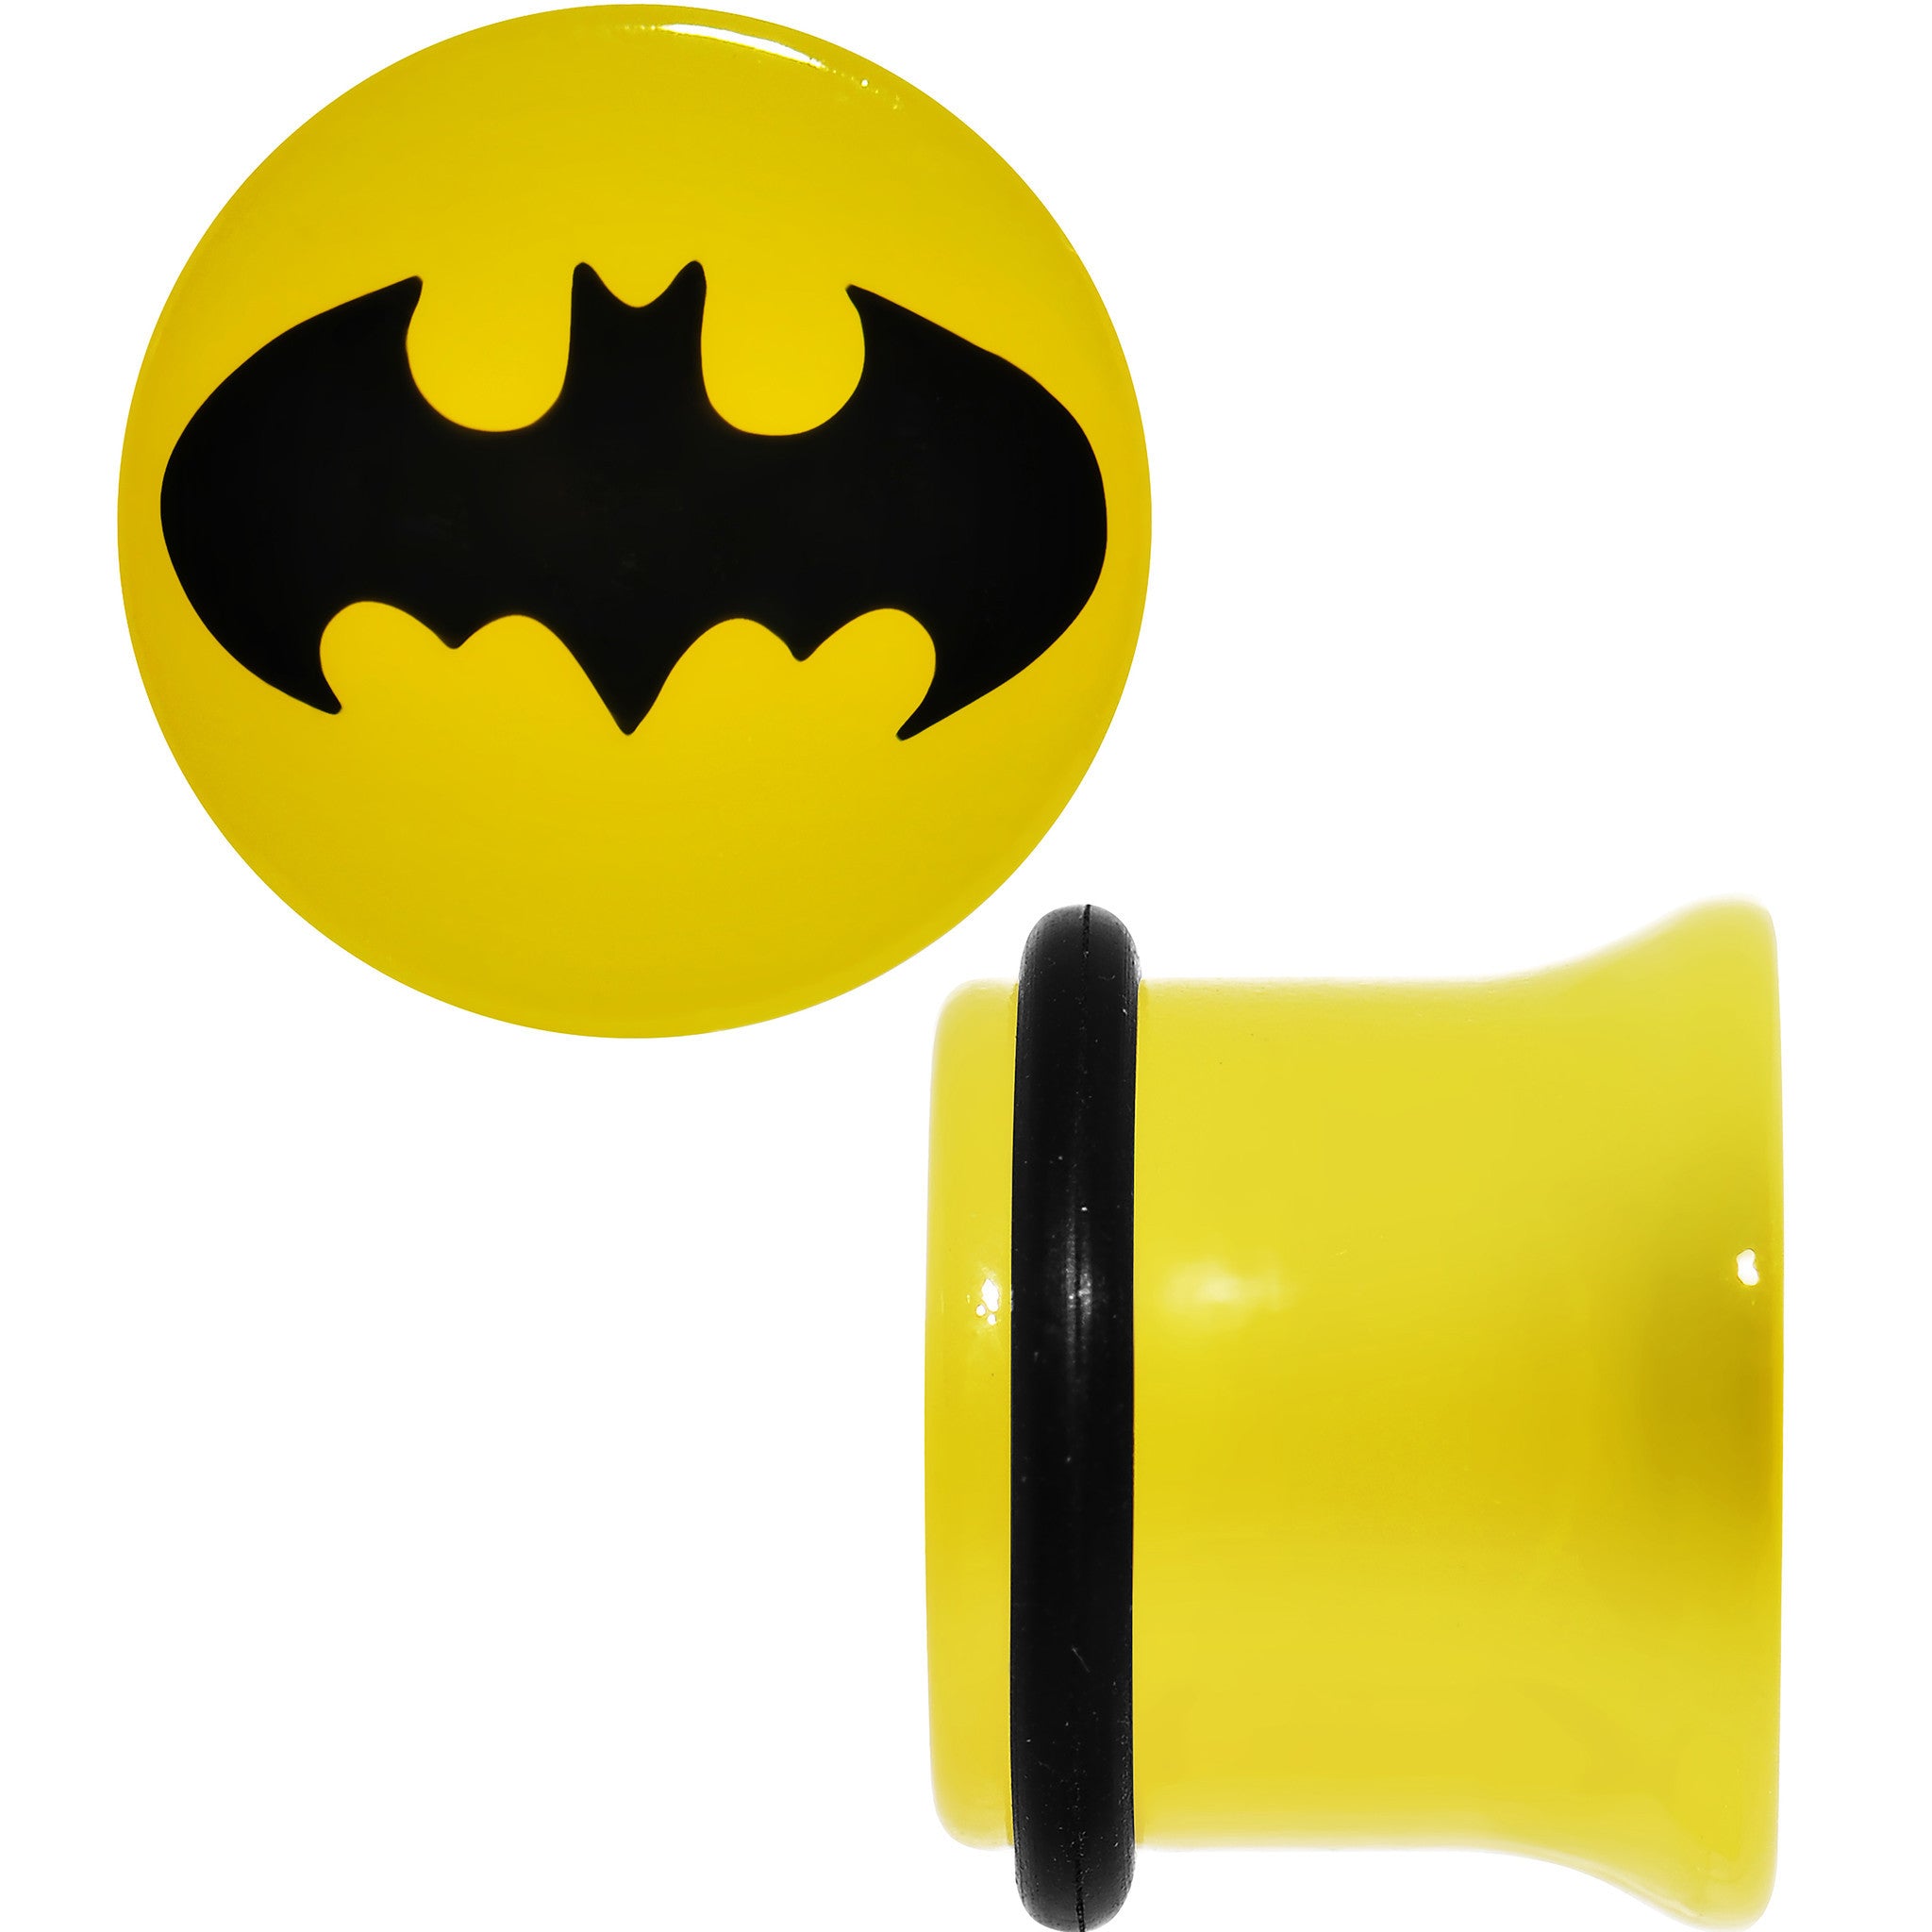 1/2 Officially Licensed Batman Yellow Single Flare Plug Set